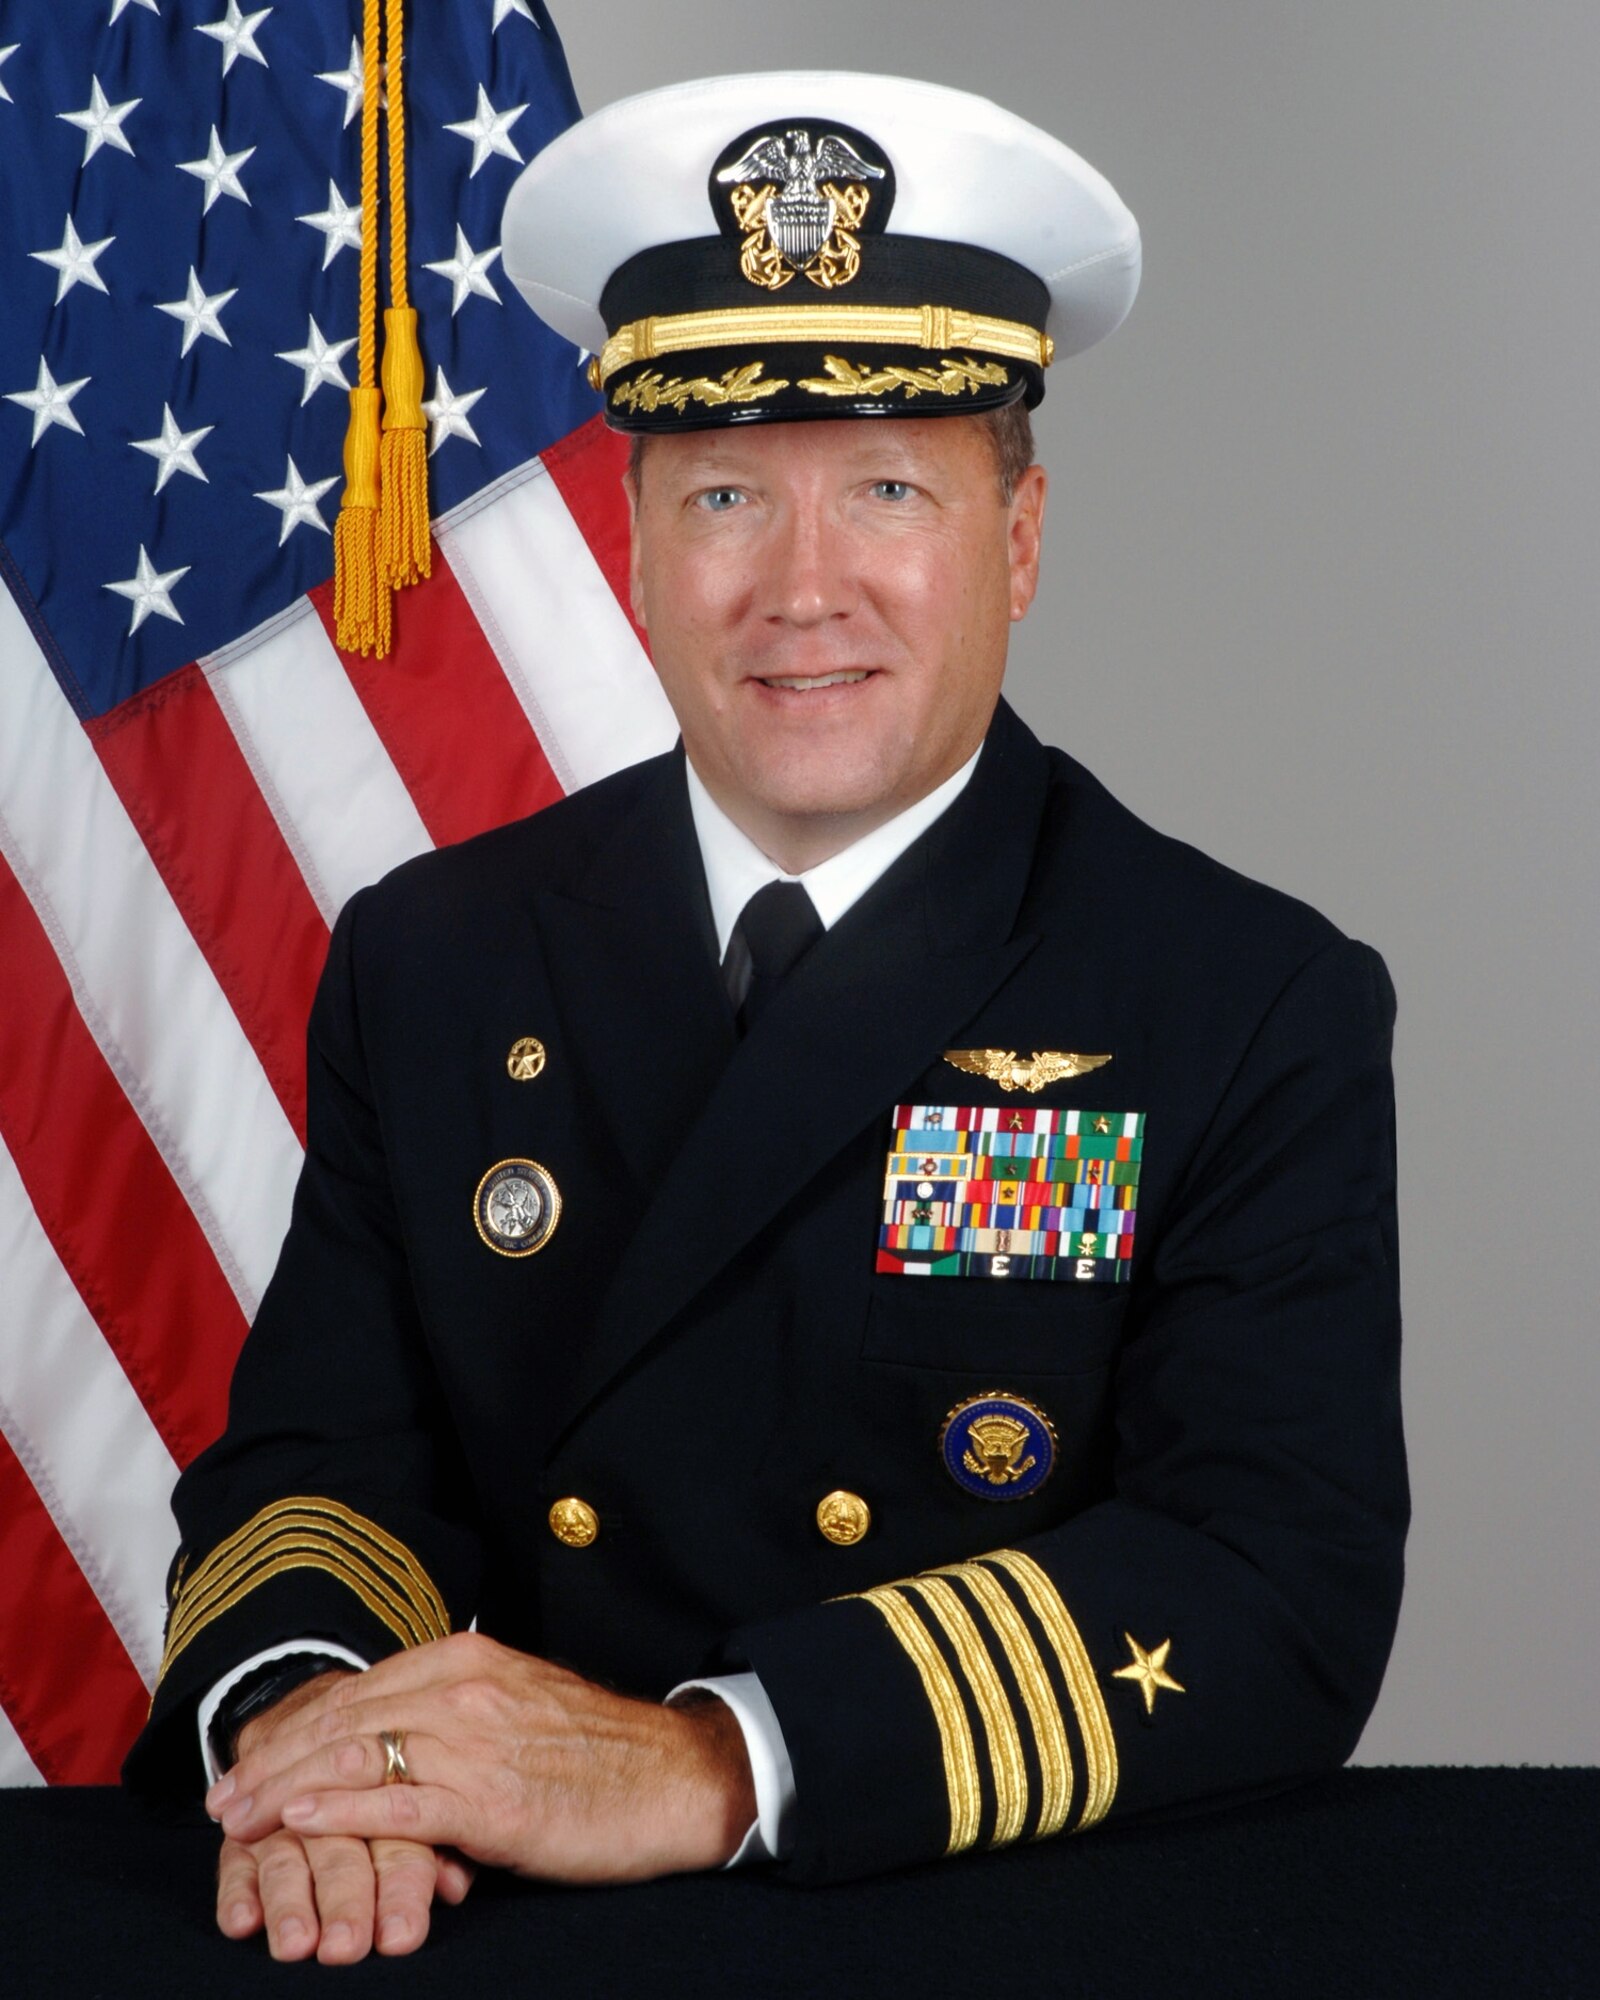 Capt. Dan Seesholtz